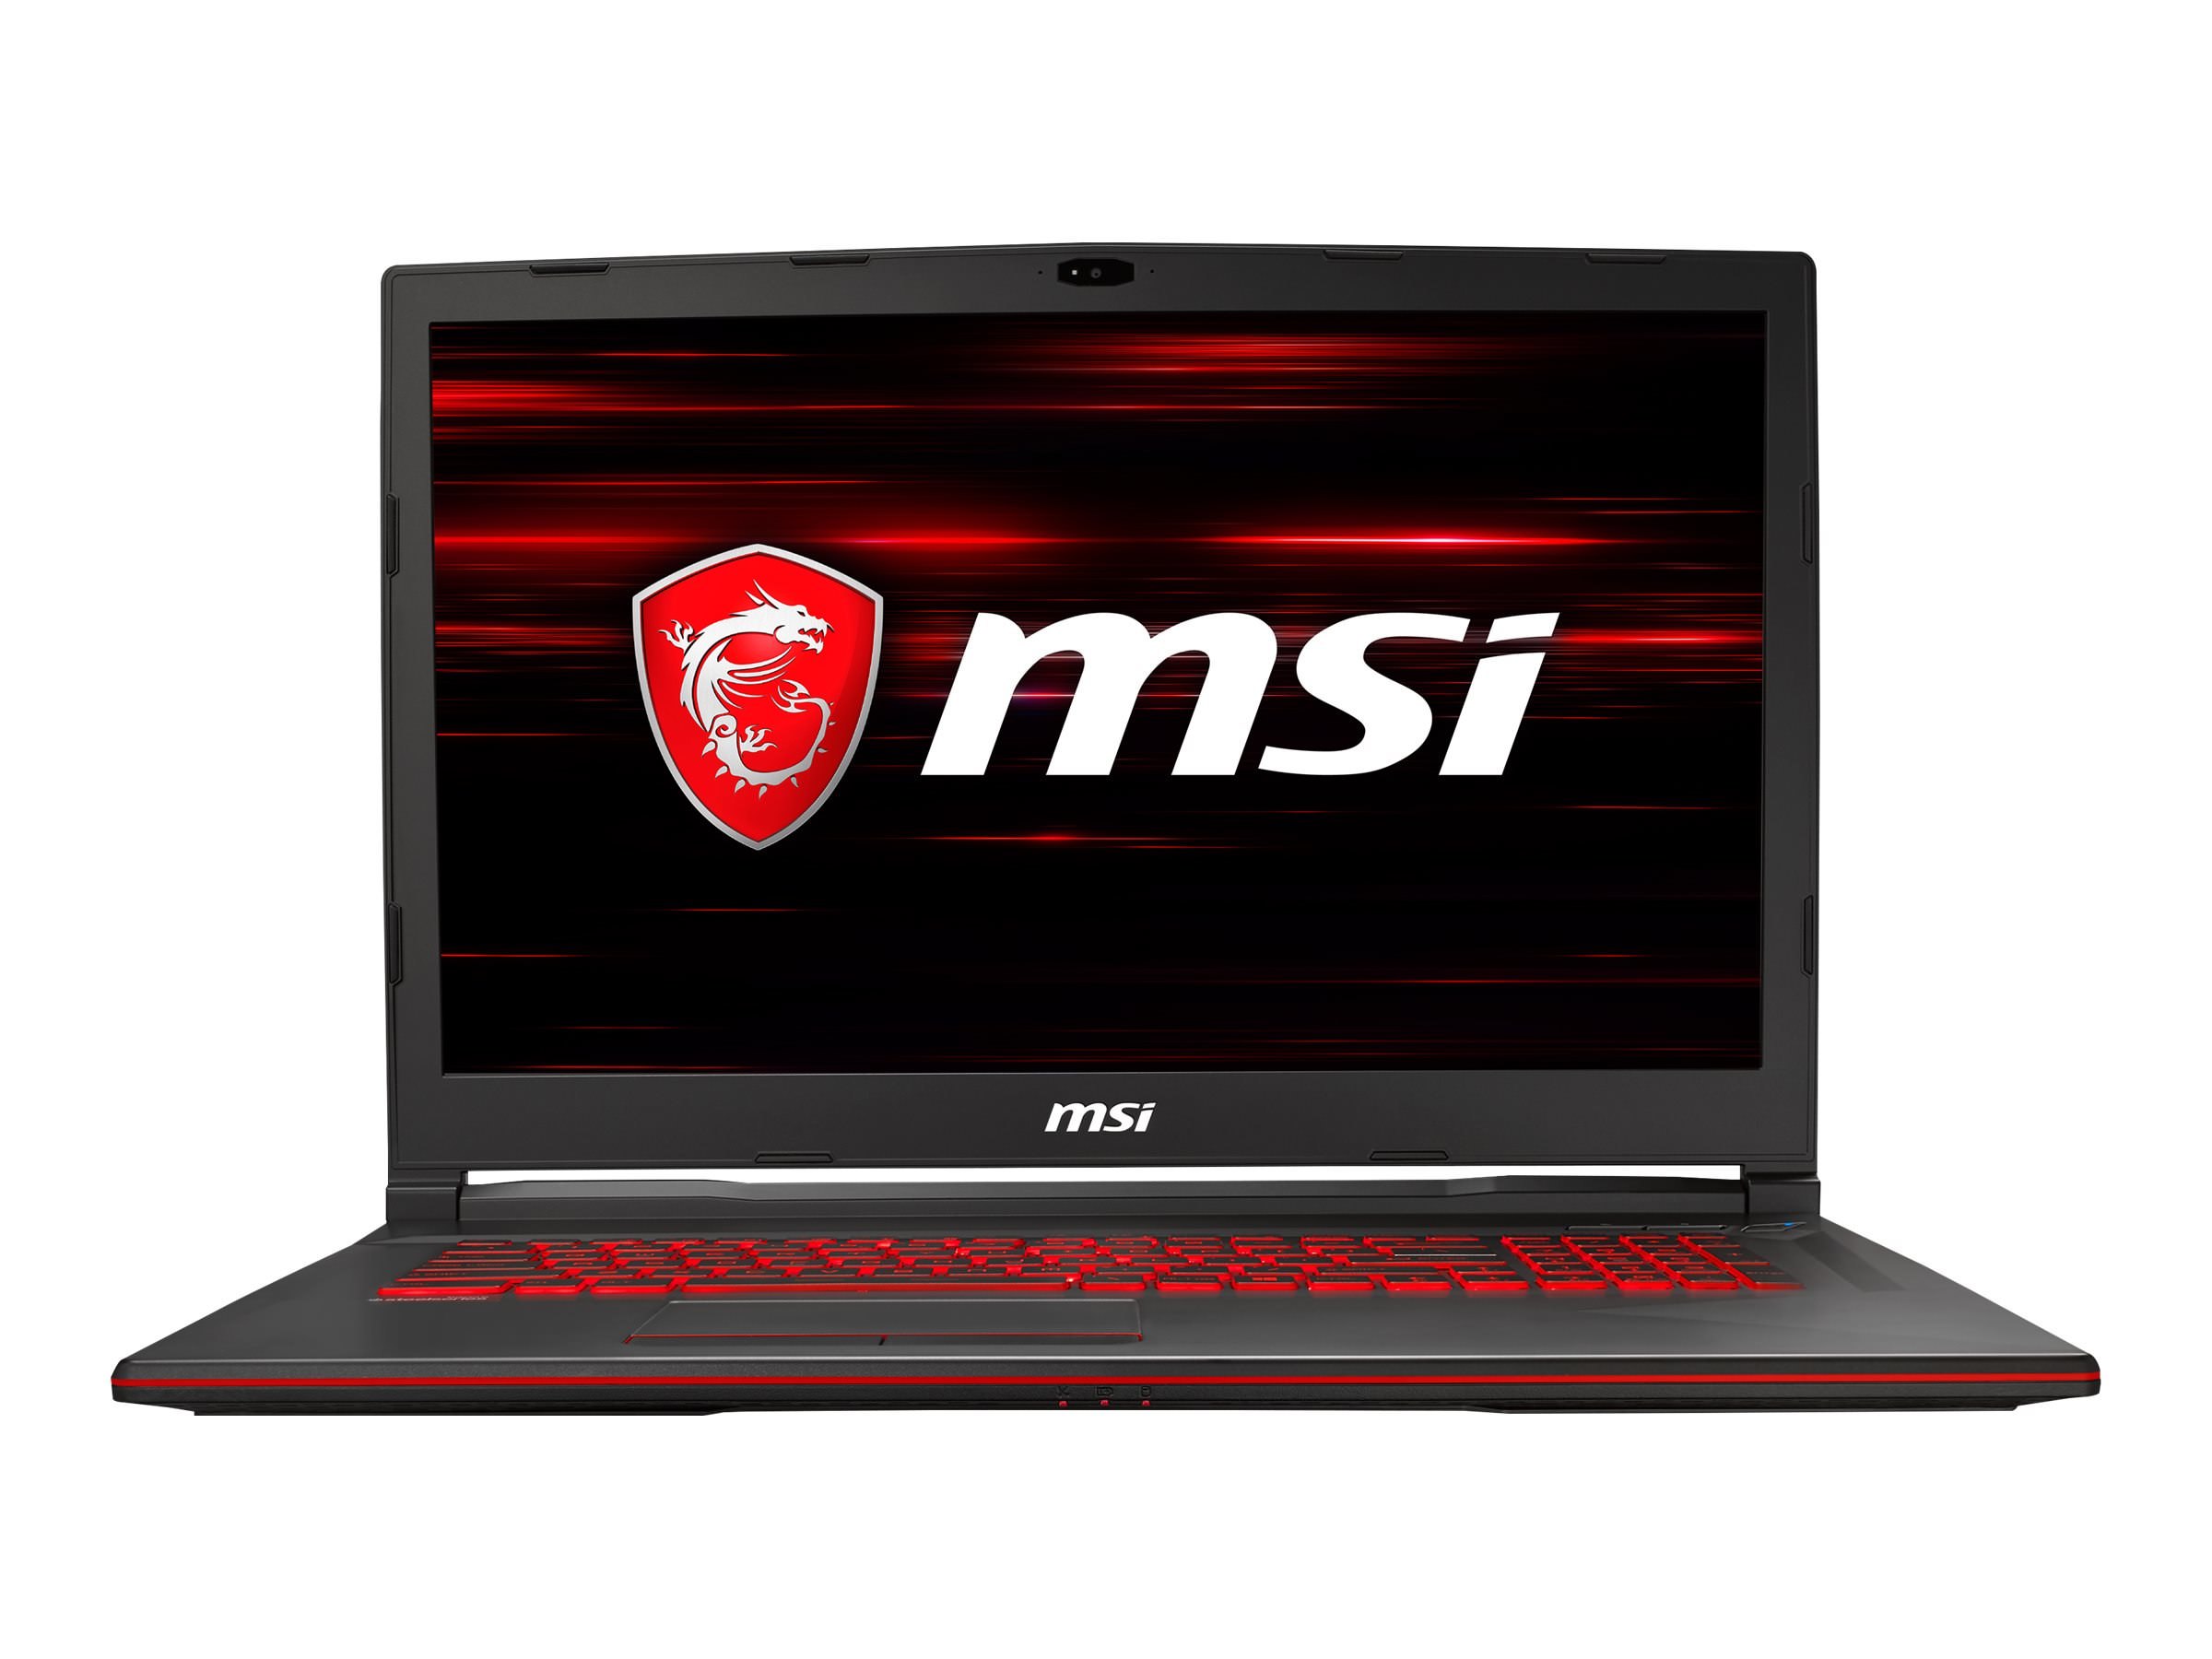 MSI GL63 Gaming Laptop 15.6", Intel Core i7-8750H, NVIDIA GeForce GTX 1050 4GB, 128GB SSD + 1TB HDD Storage, 16GB RAM, 8RC-068 - image 2 of 5